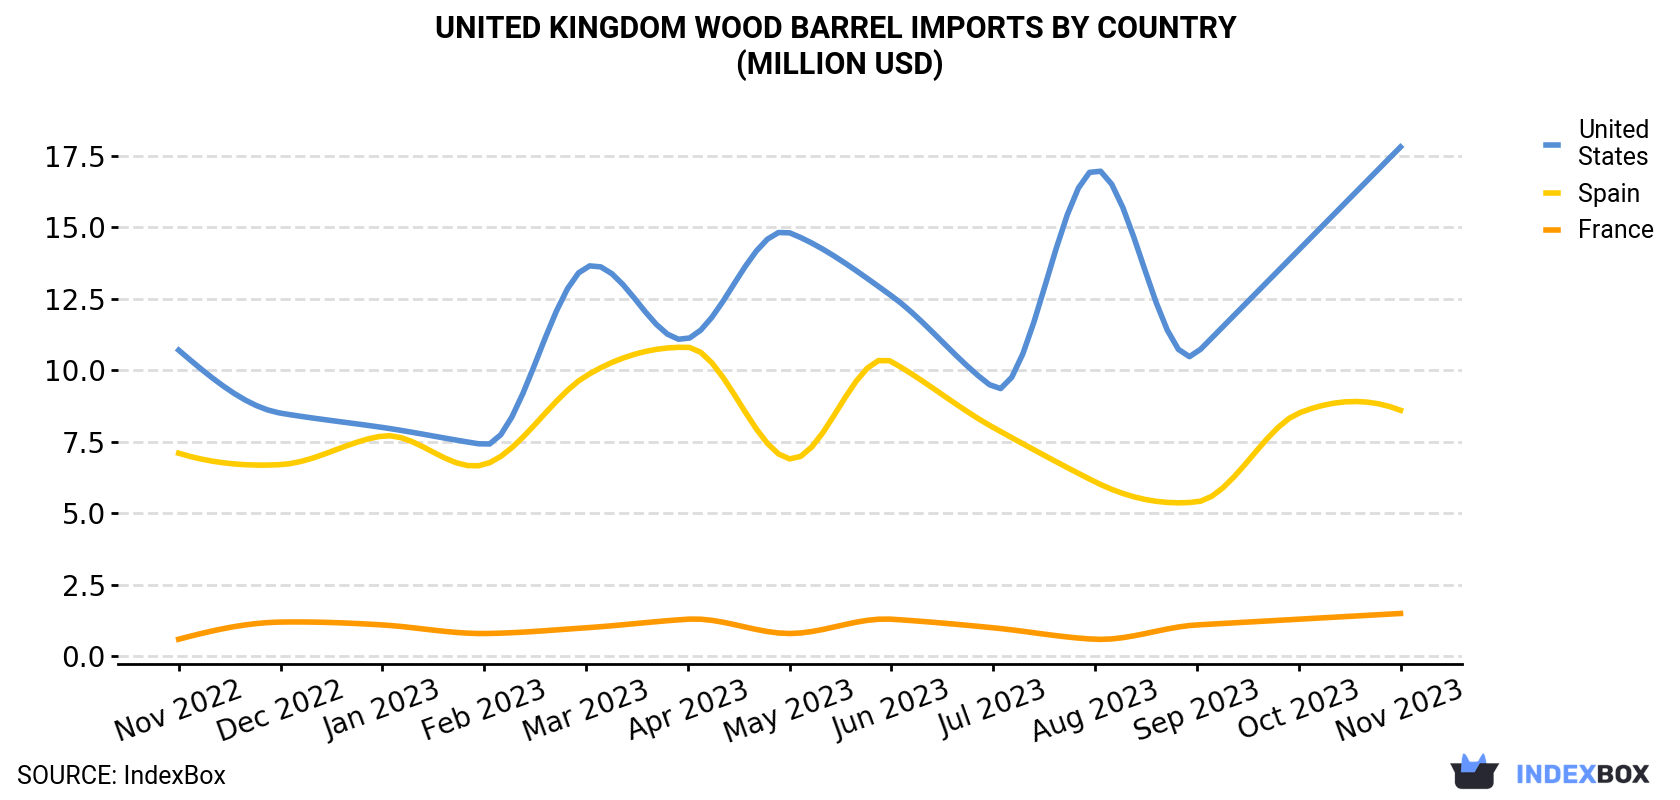 United Kingdom Wood Barrel Imports By Country (Million USD)